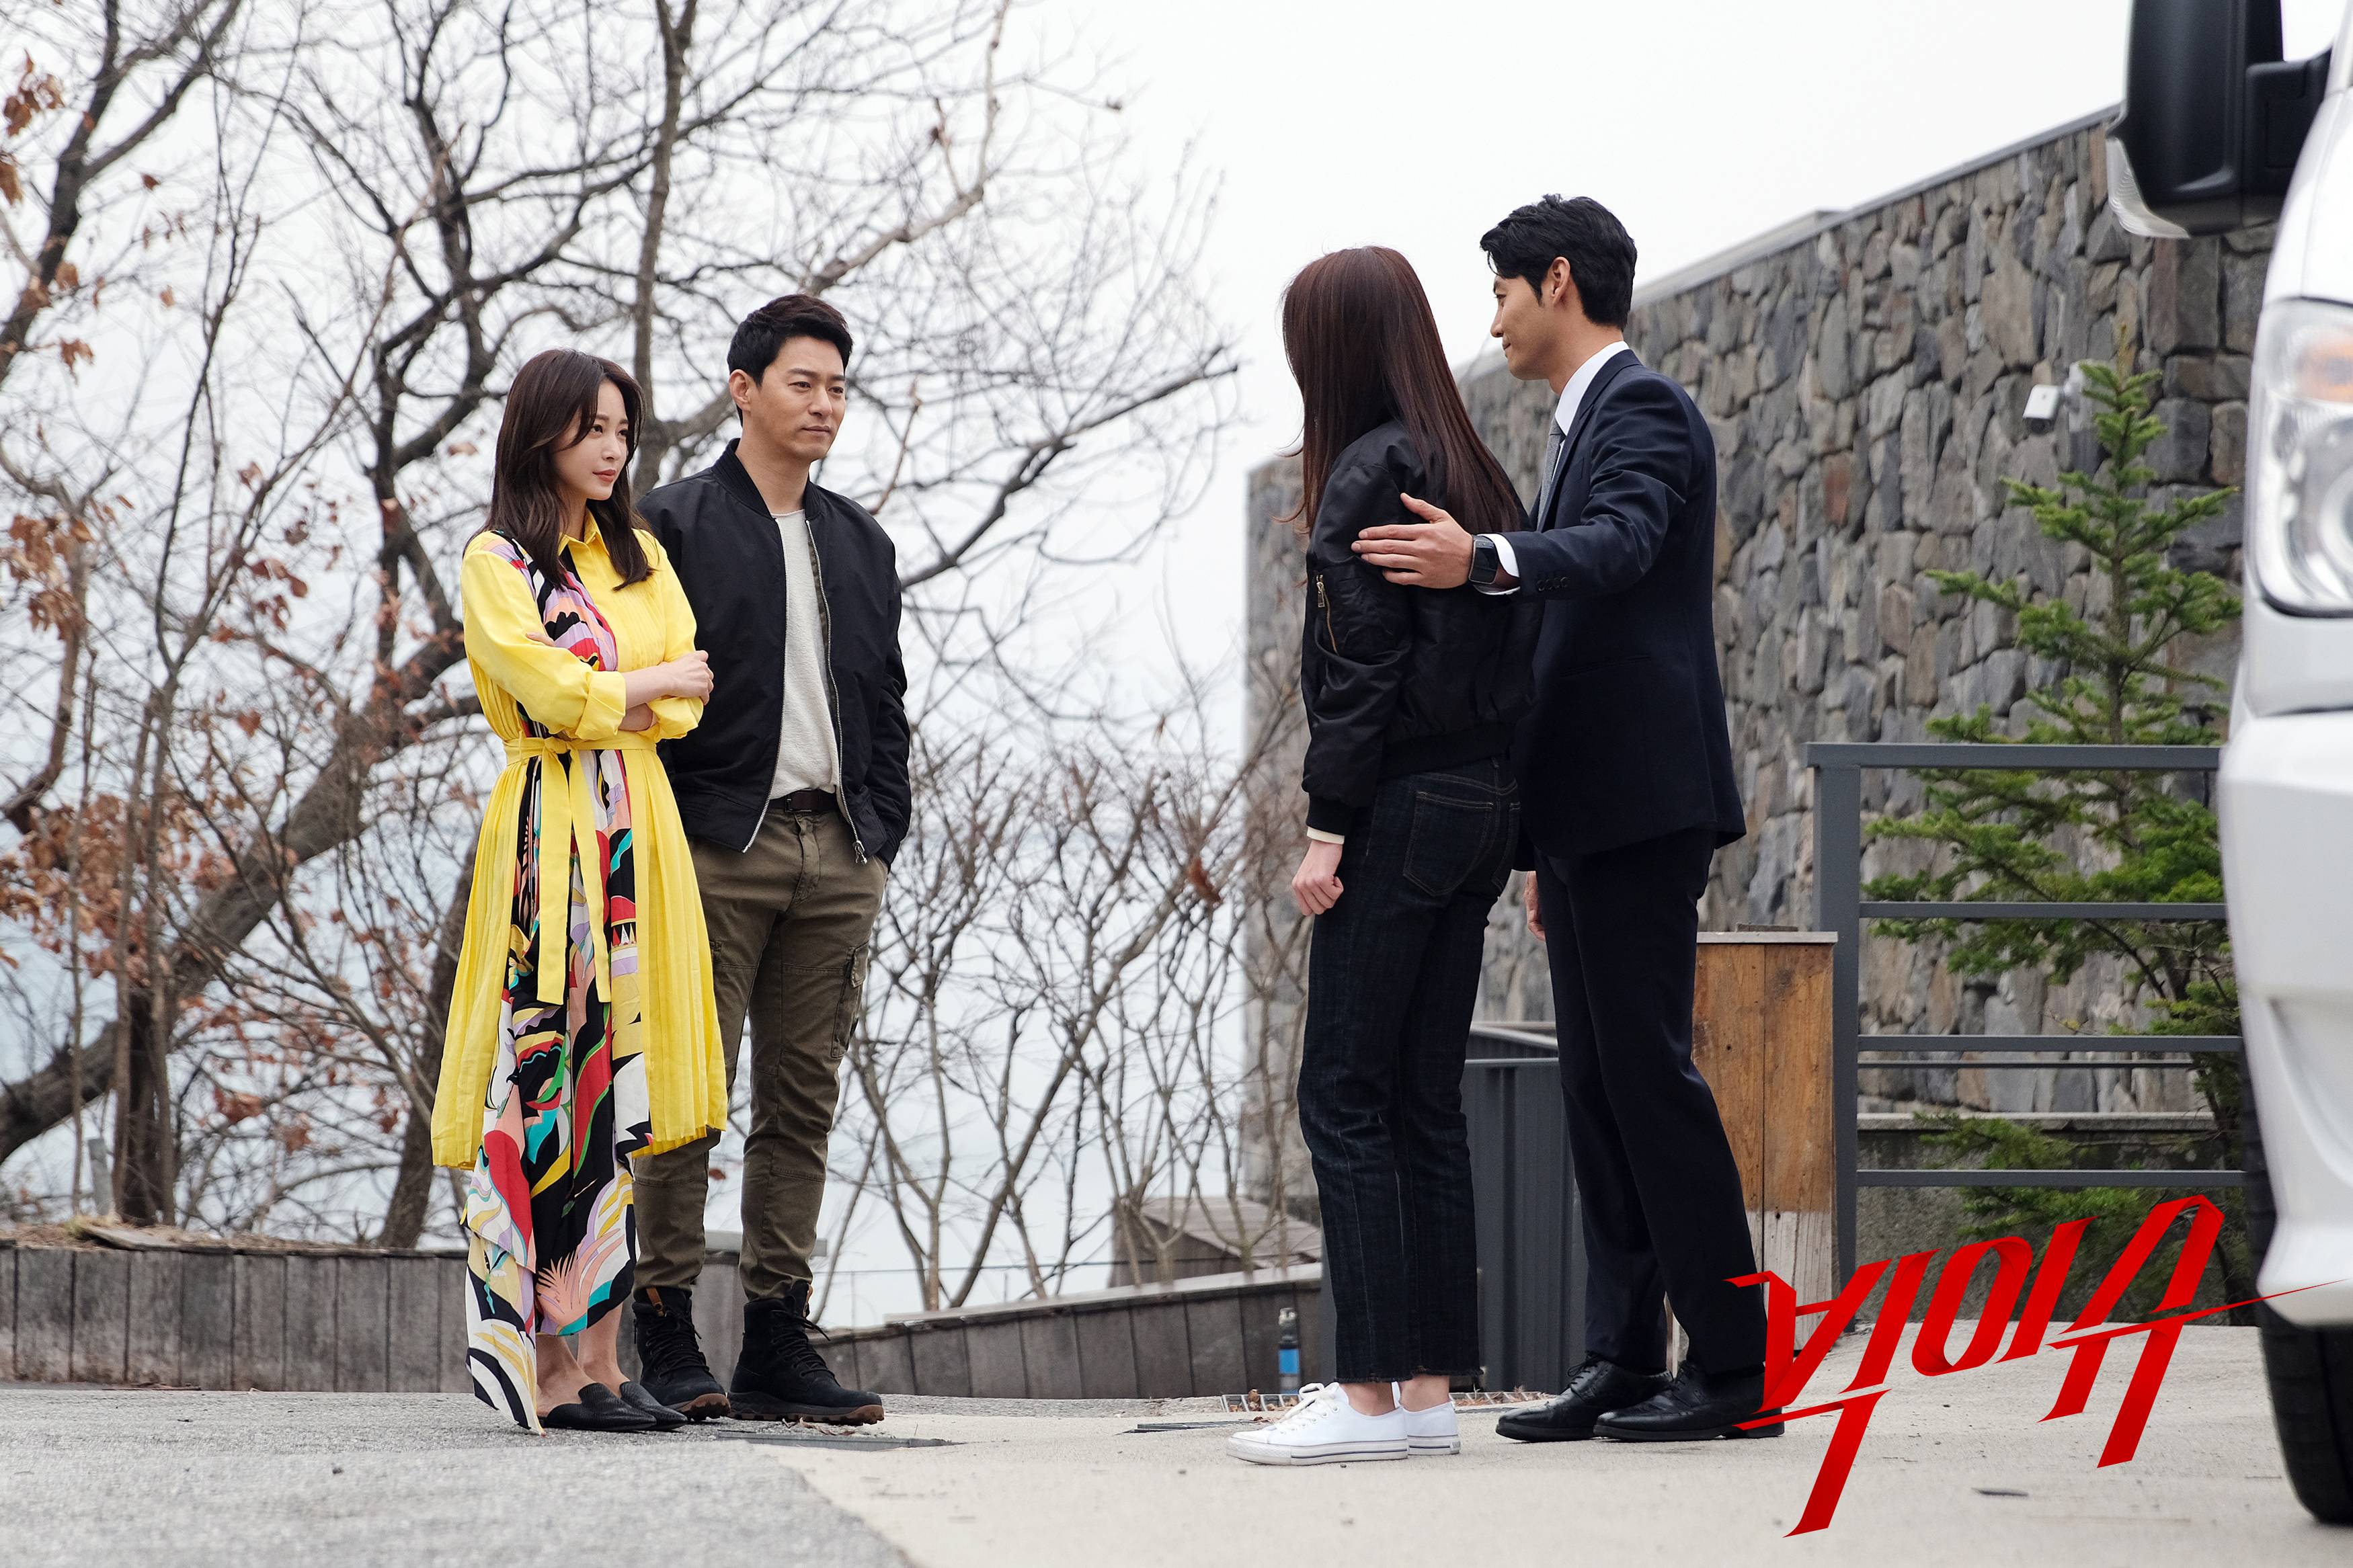 [Photos] New Stills Added for the Korean Drama 'Big Issue' @ HanCinema